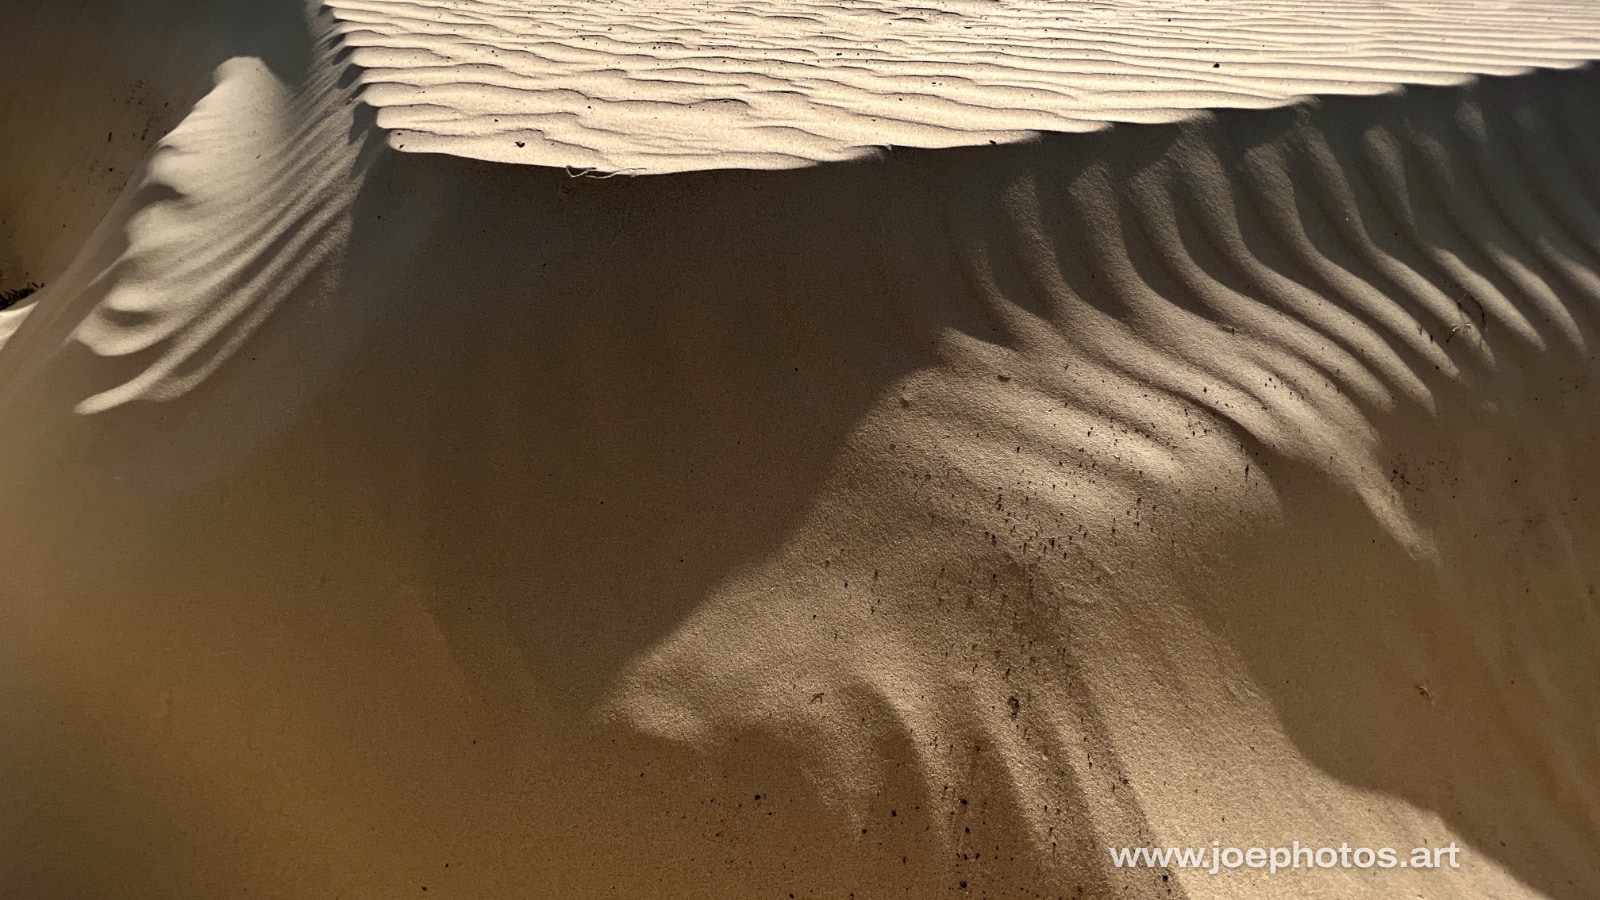 Beach sand dune ripples and edge.